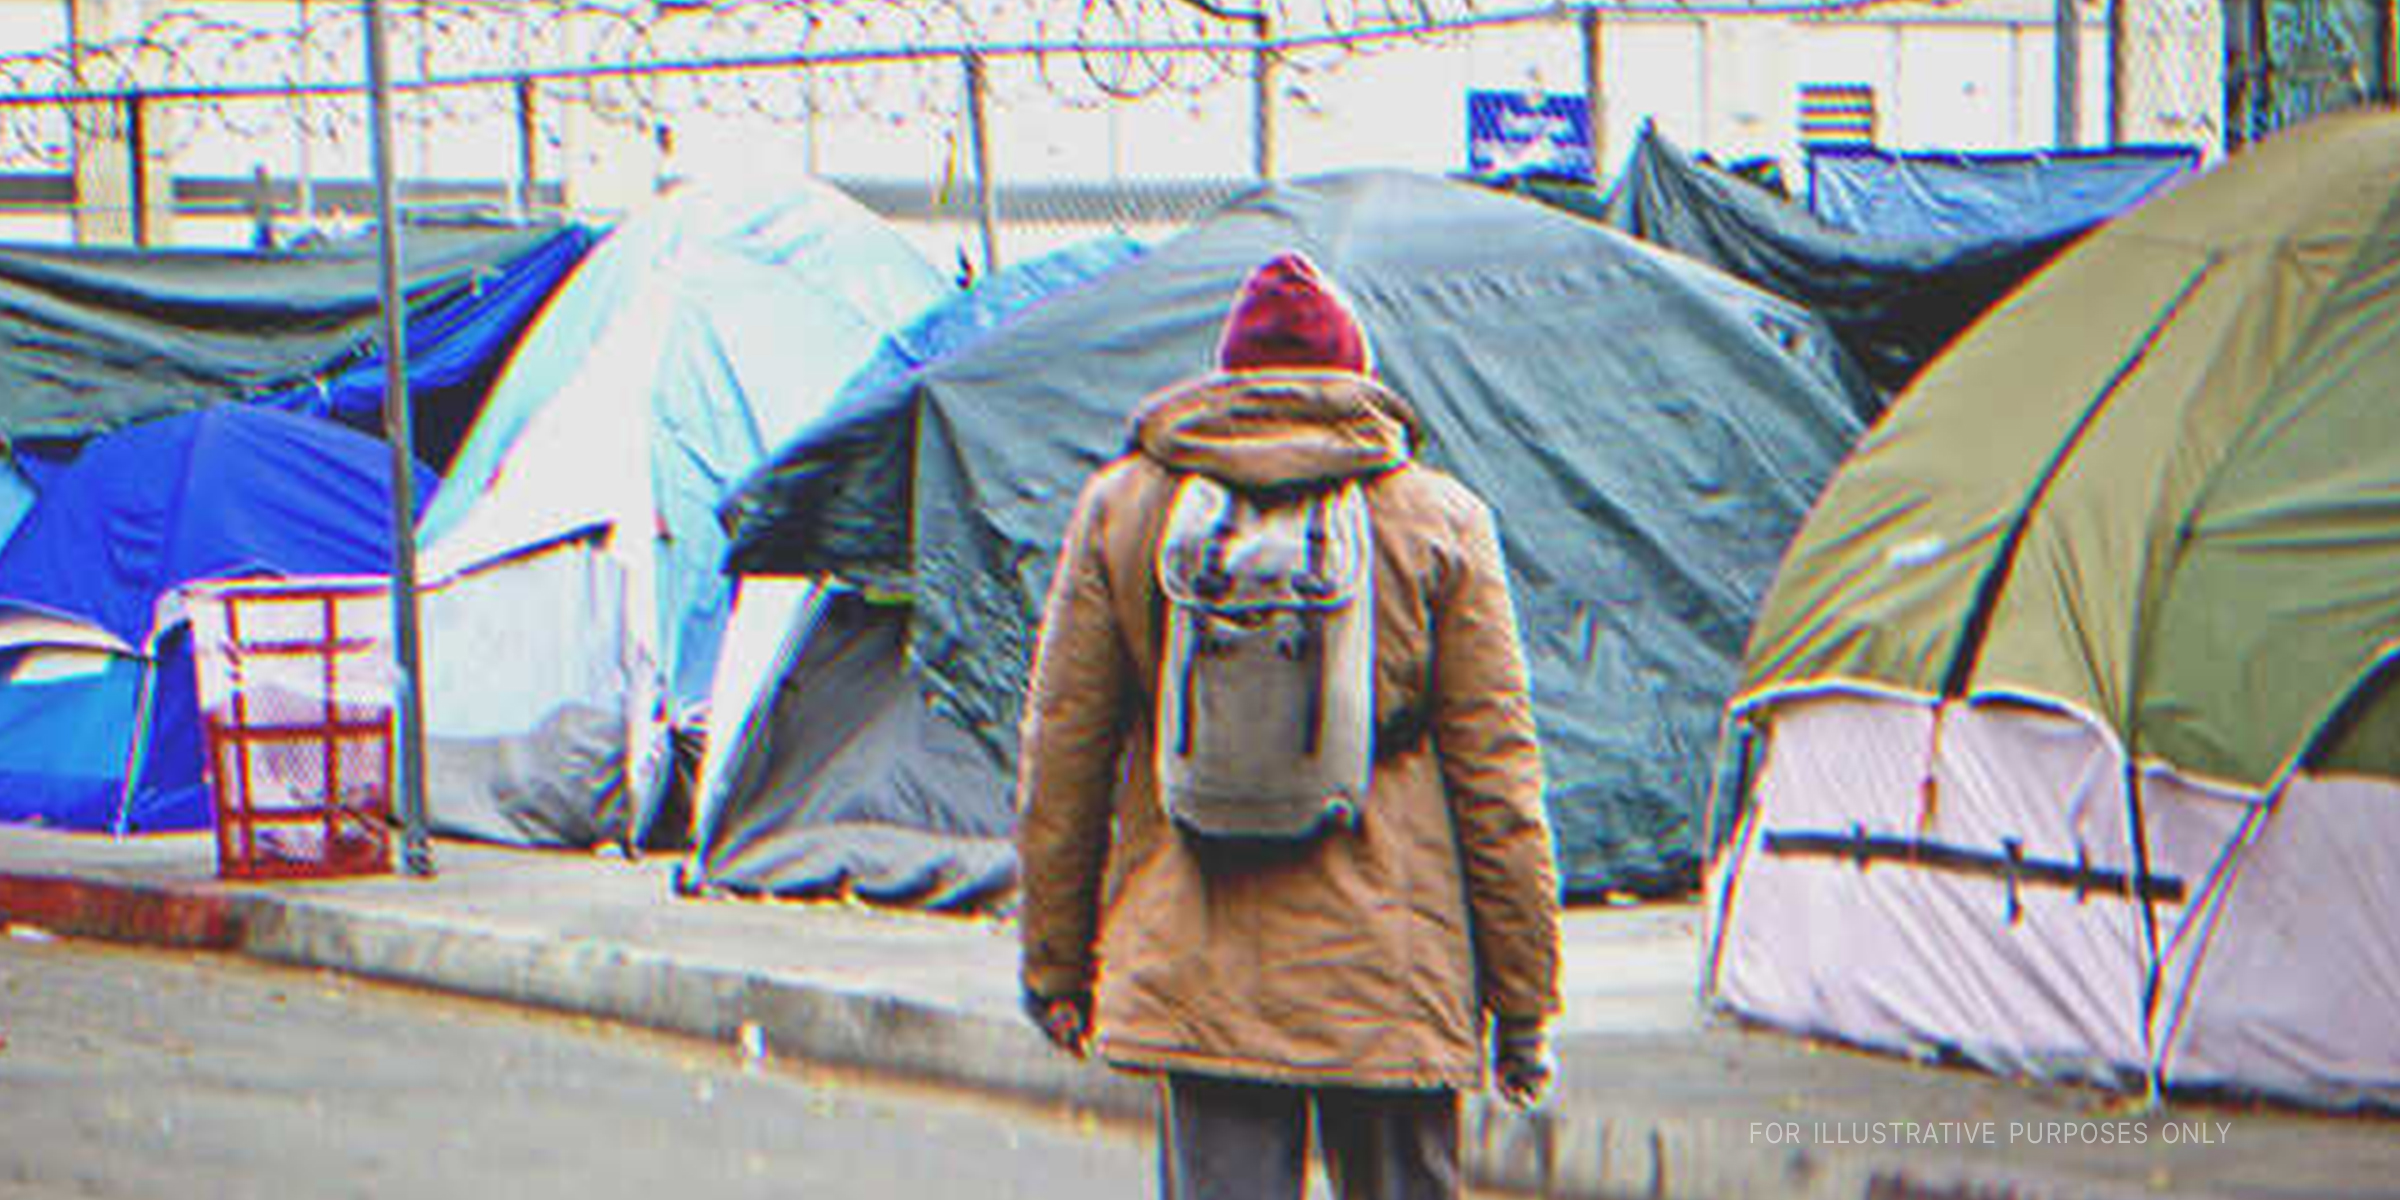 Homeless man approaching tents on sidewalk | Source: Shutterstock